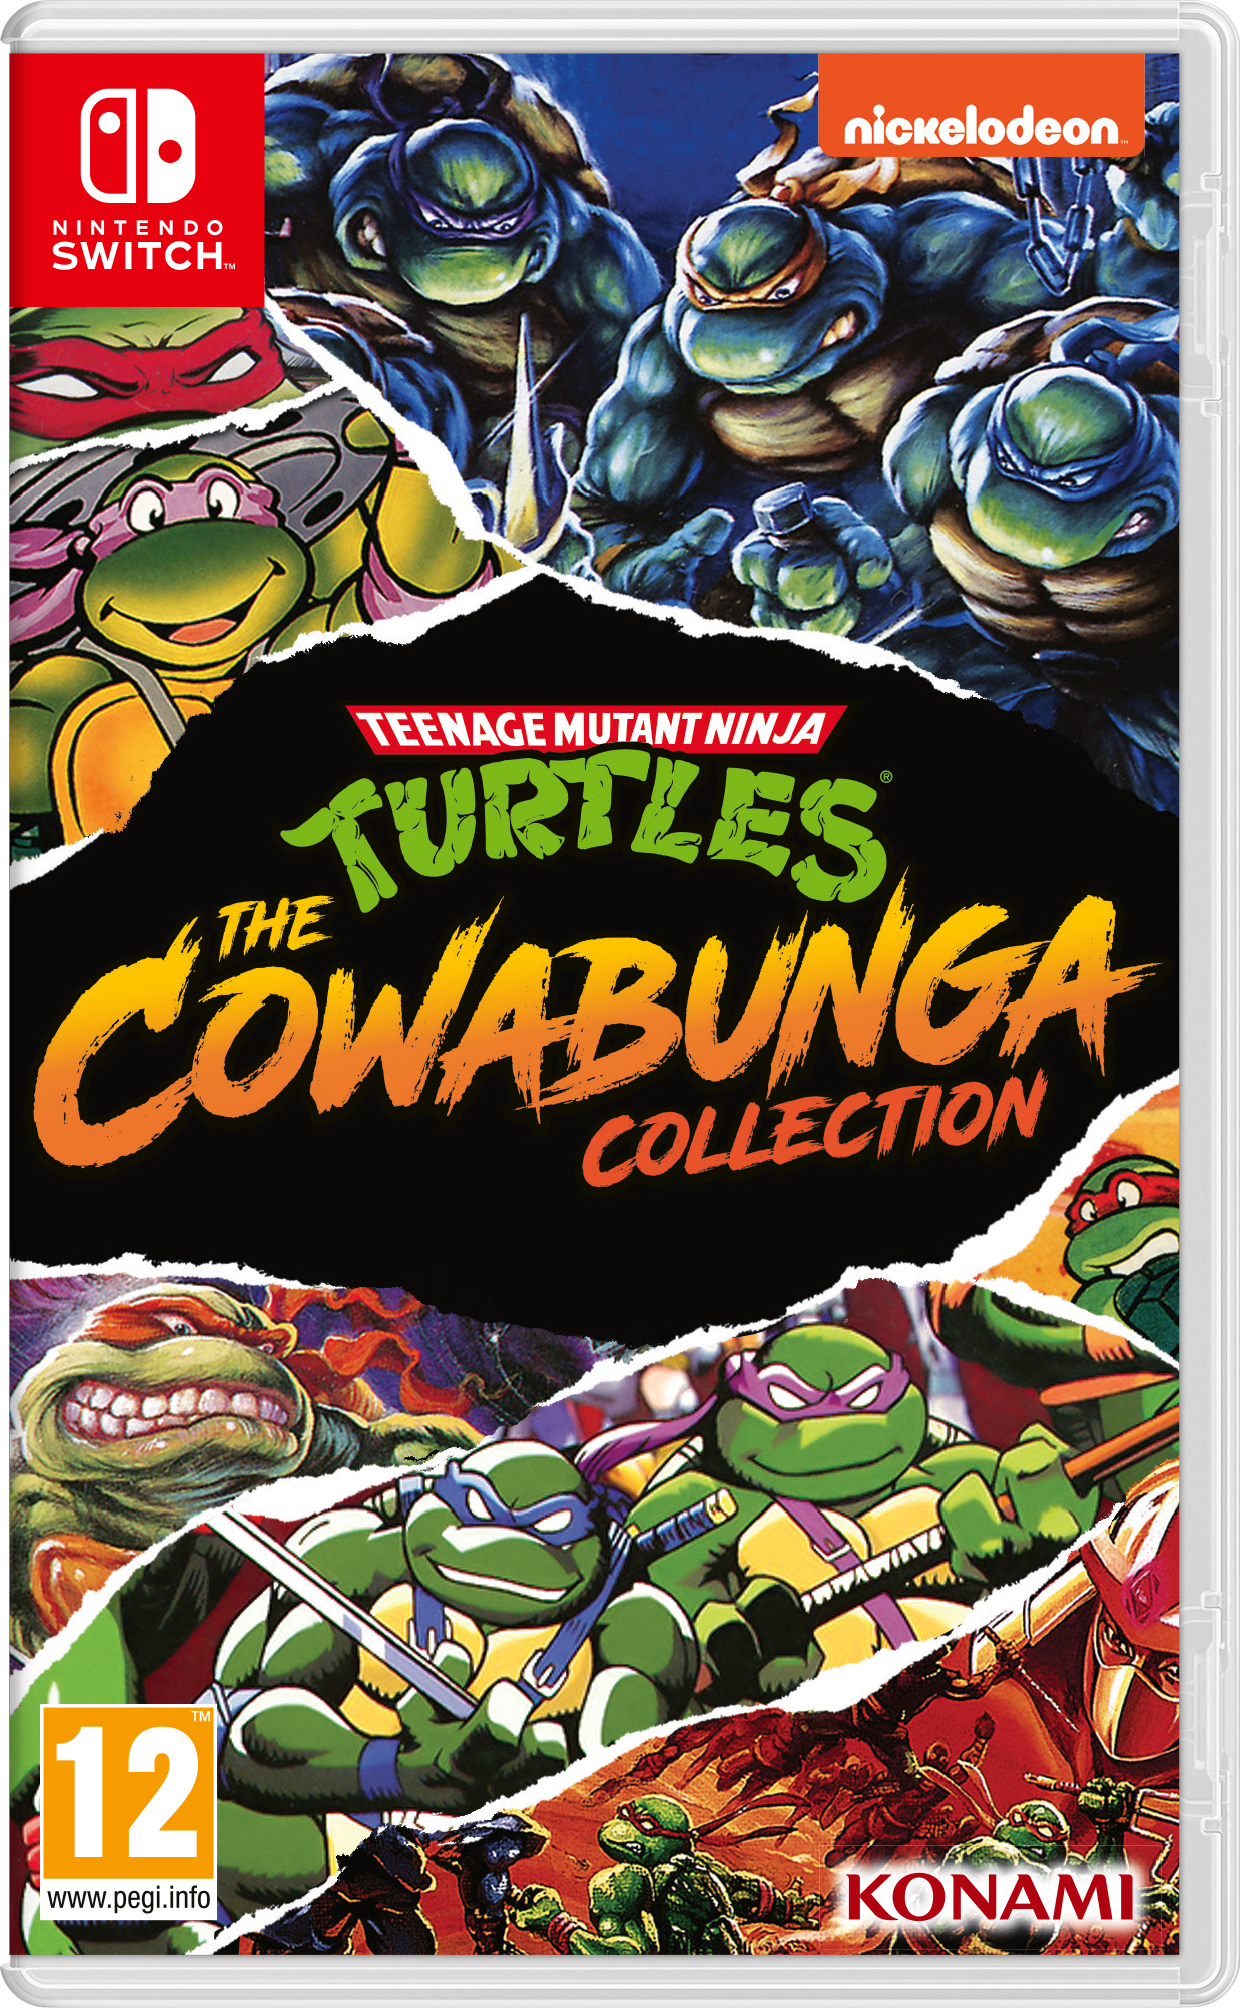 Turtles cowabunga. Нинтендо свитч ниндзя. TMNT: the Cowabunga collection на Nintendo Switch. Teenage Mutant Ninja Turtles: the Cowabunga. Черепашки ниндзя на Нинтендо свитч.